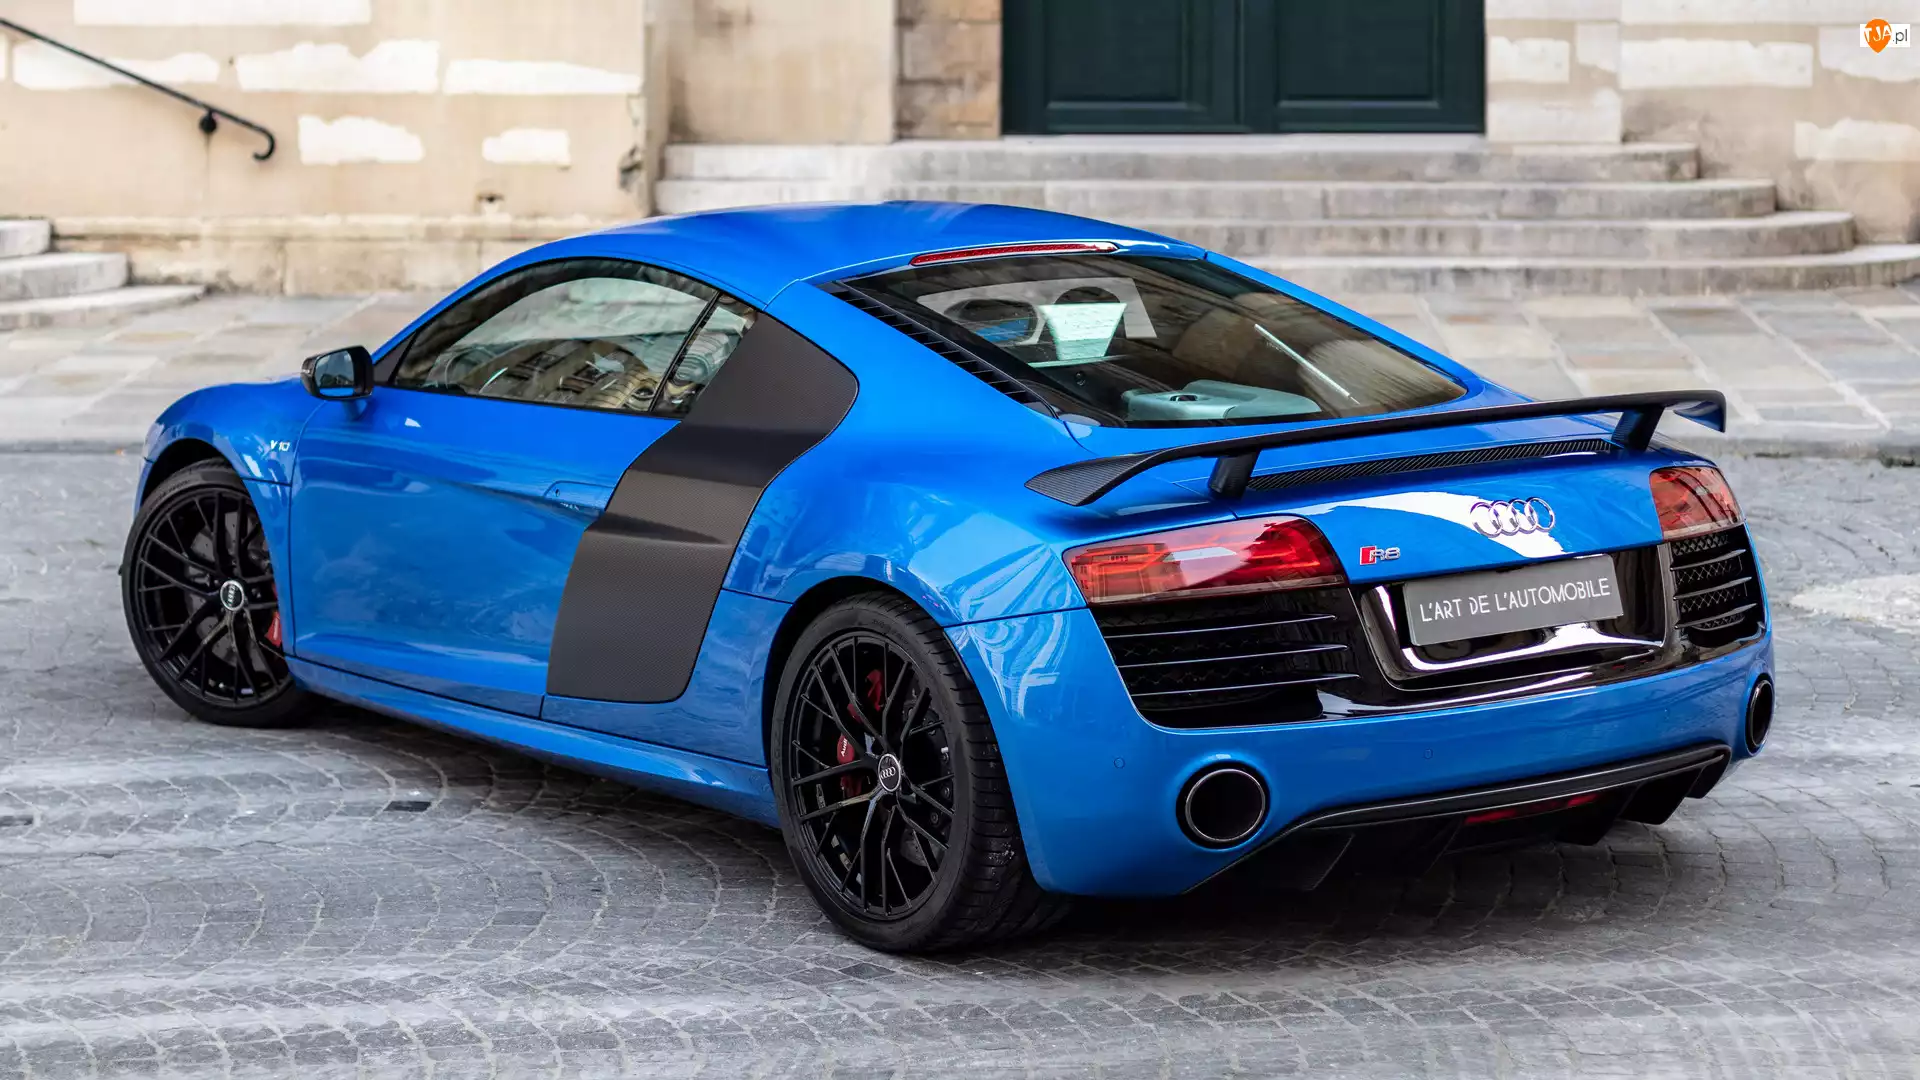 Niebieskie, Audi R8, Coupe